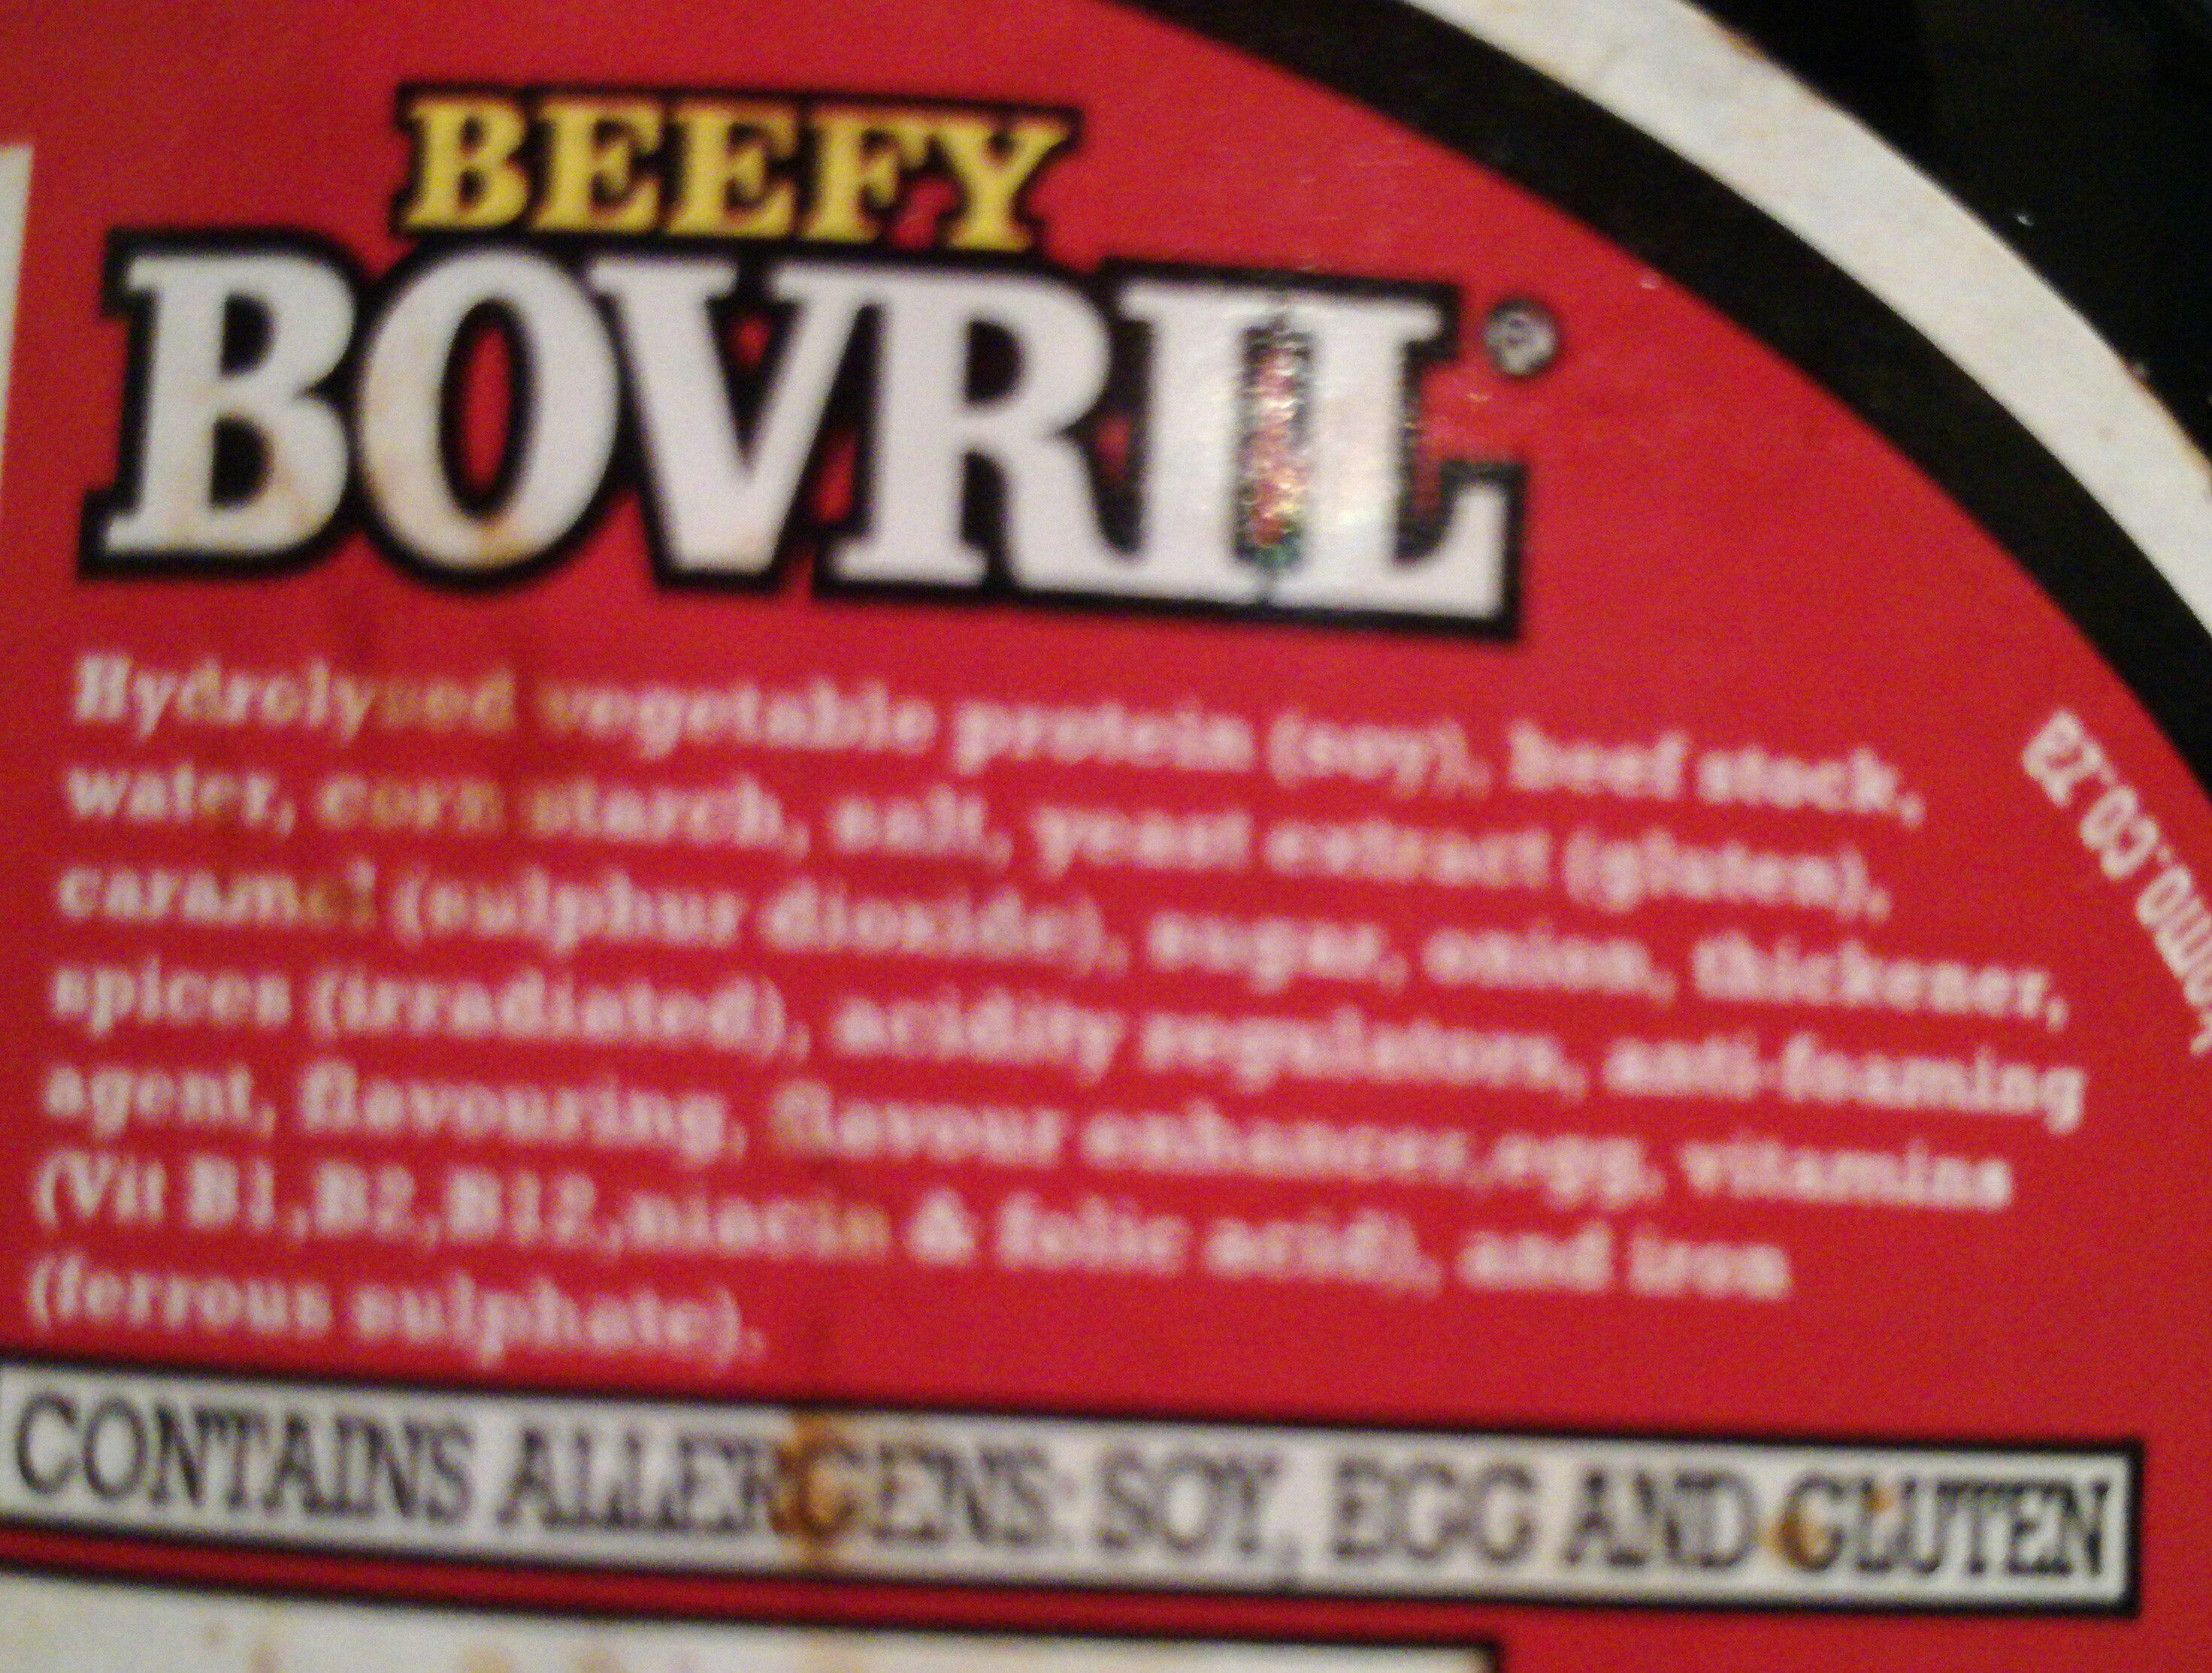 Beefy Bovril - Ingredients